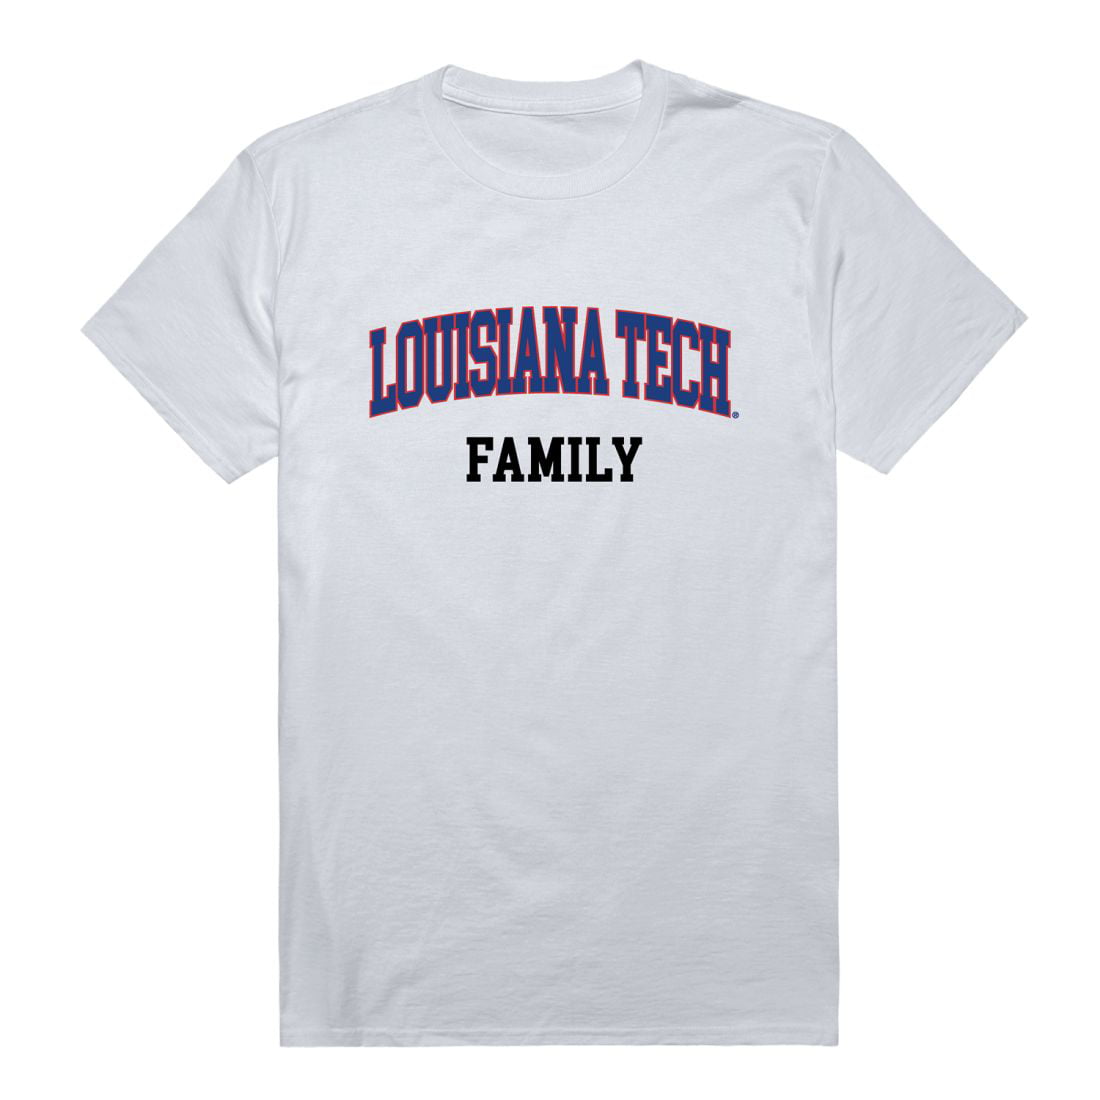 W Republic I Love Louisiana Tech University Bulldogs Hoodie Sweatshirt